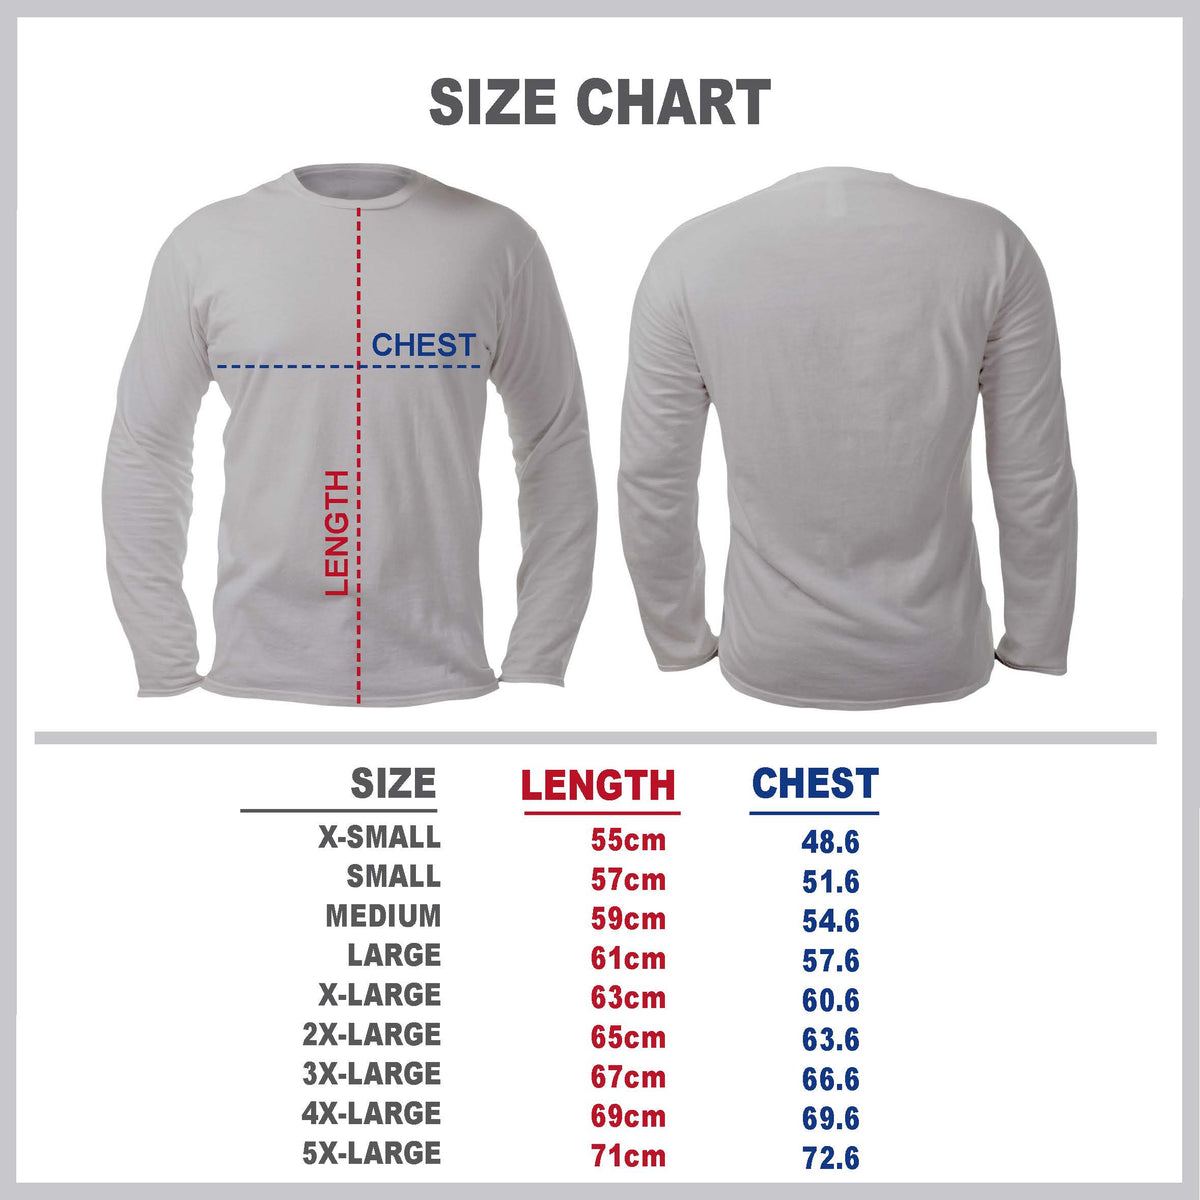 NSRI T-Shirt - Long Sleeve Charcoal